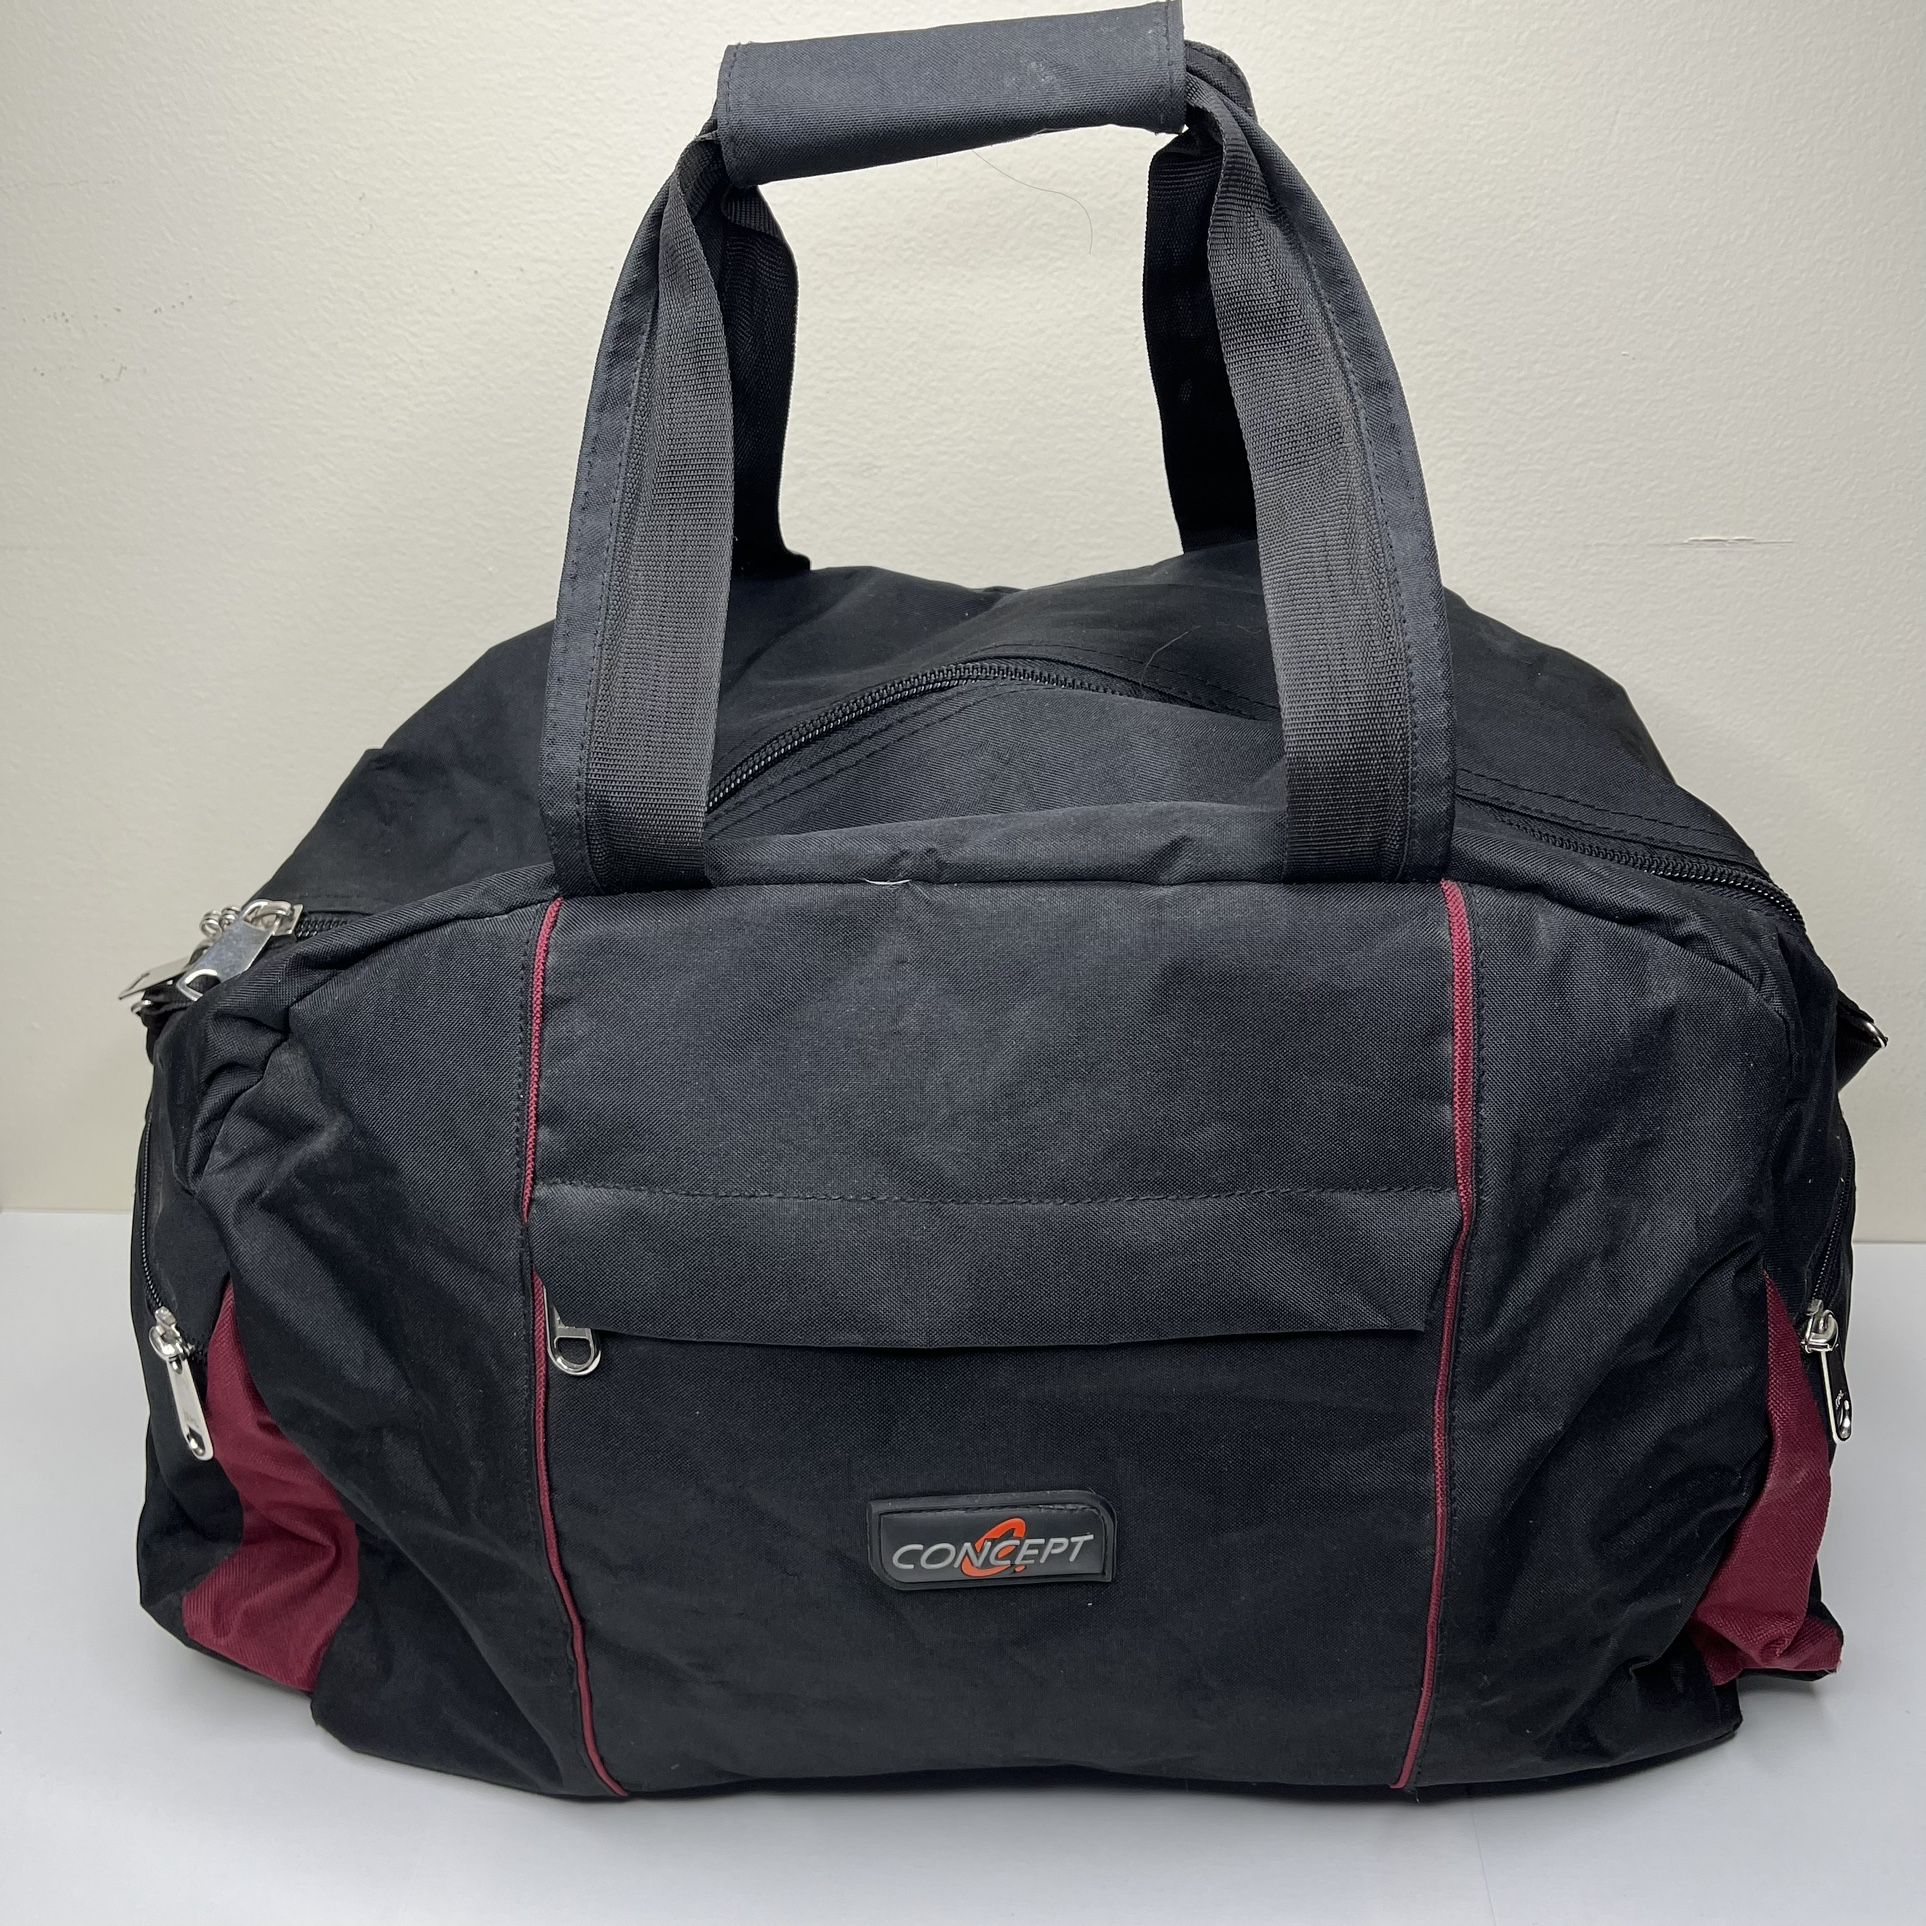 Concept Duffle Bag-lockable-Black And Maroon -shoulder Strap-18” x 10” x 12”